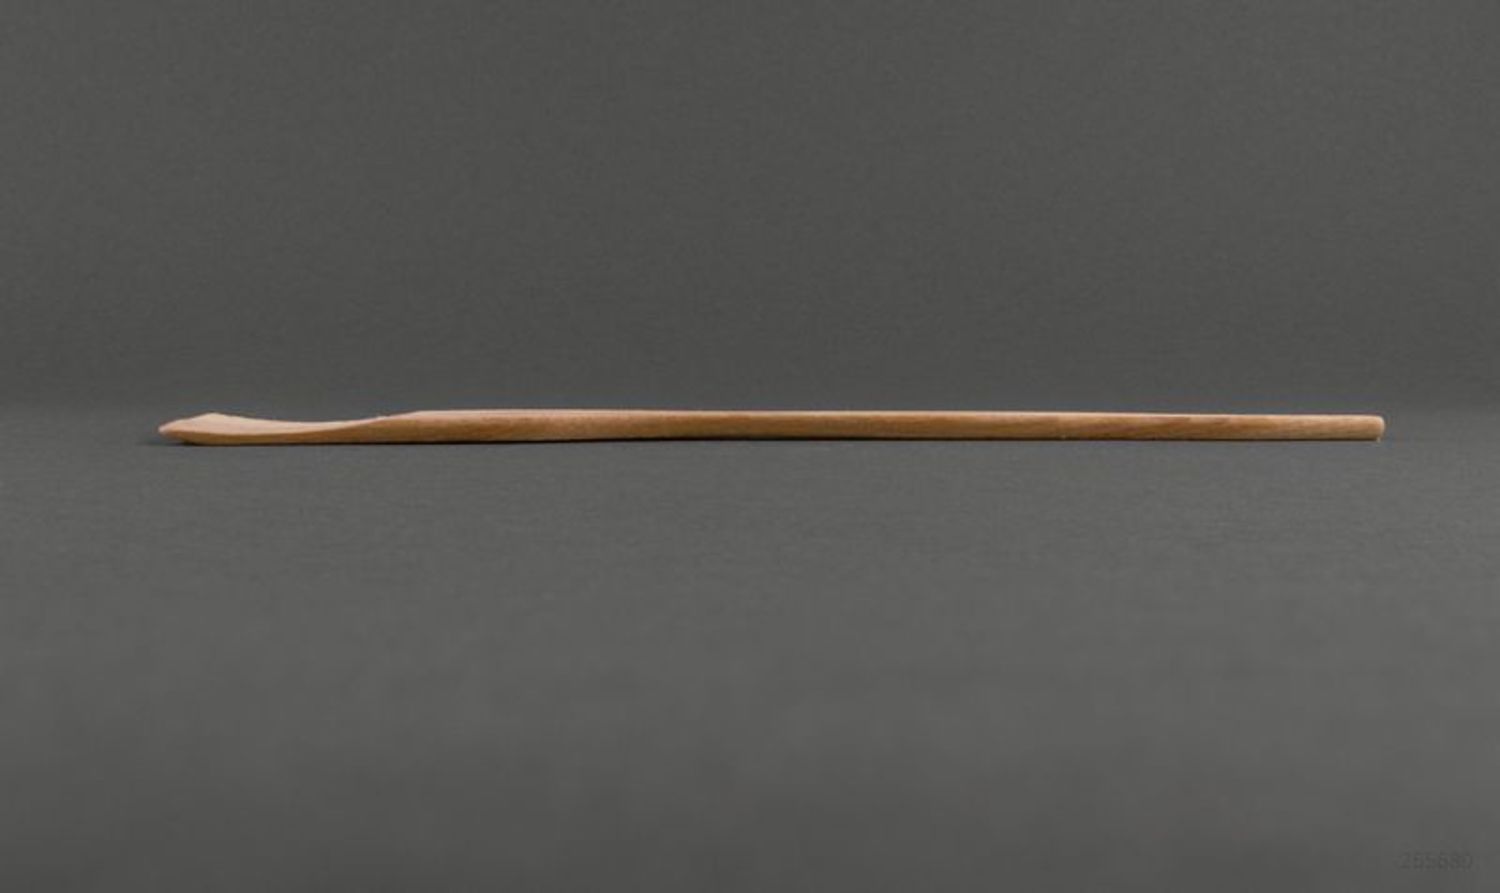 Wooden spatula photo 3